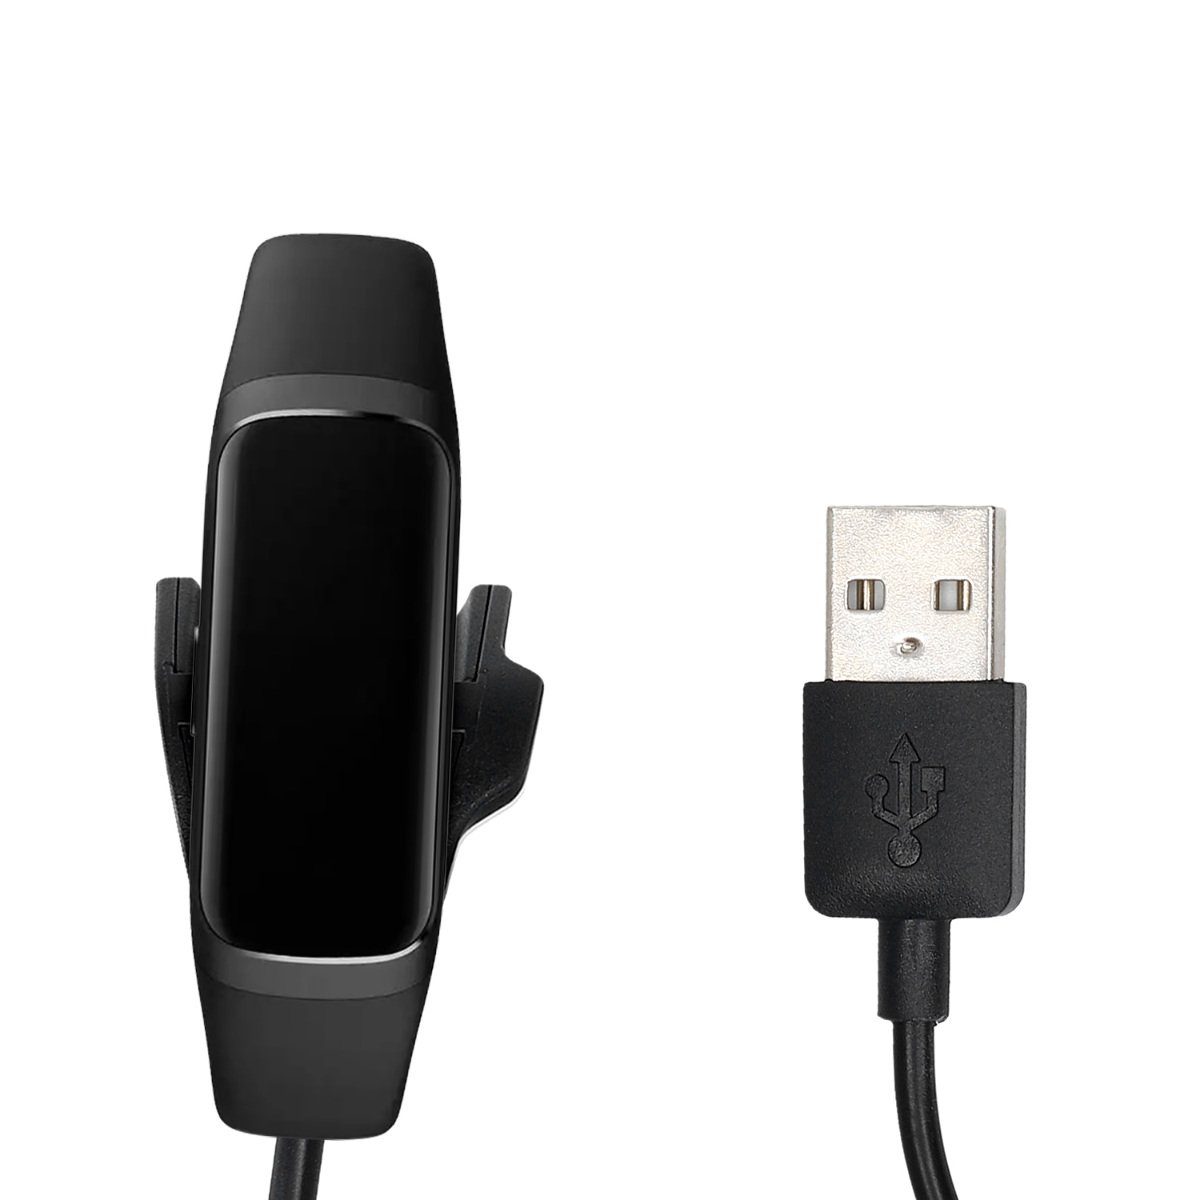 - Fit Kabel USB e für Smart Elektro-Kabel, Ladekabel Watch kwmobile Galaxy Fitnesstracker Aufladekabel Samsung Charger Ersatzkabel -